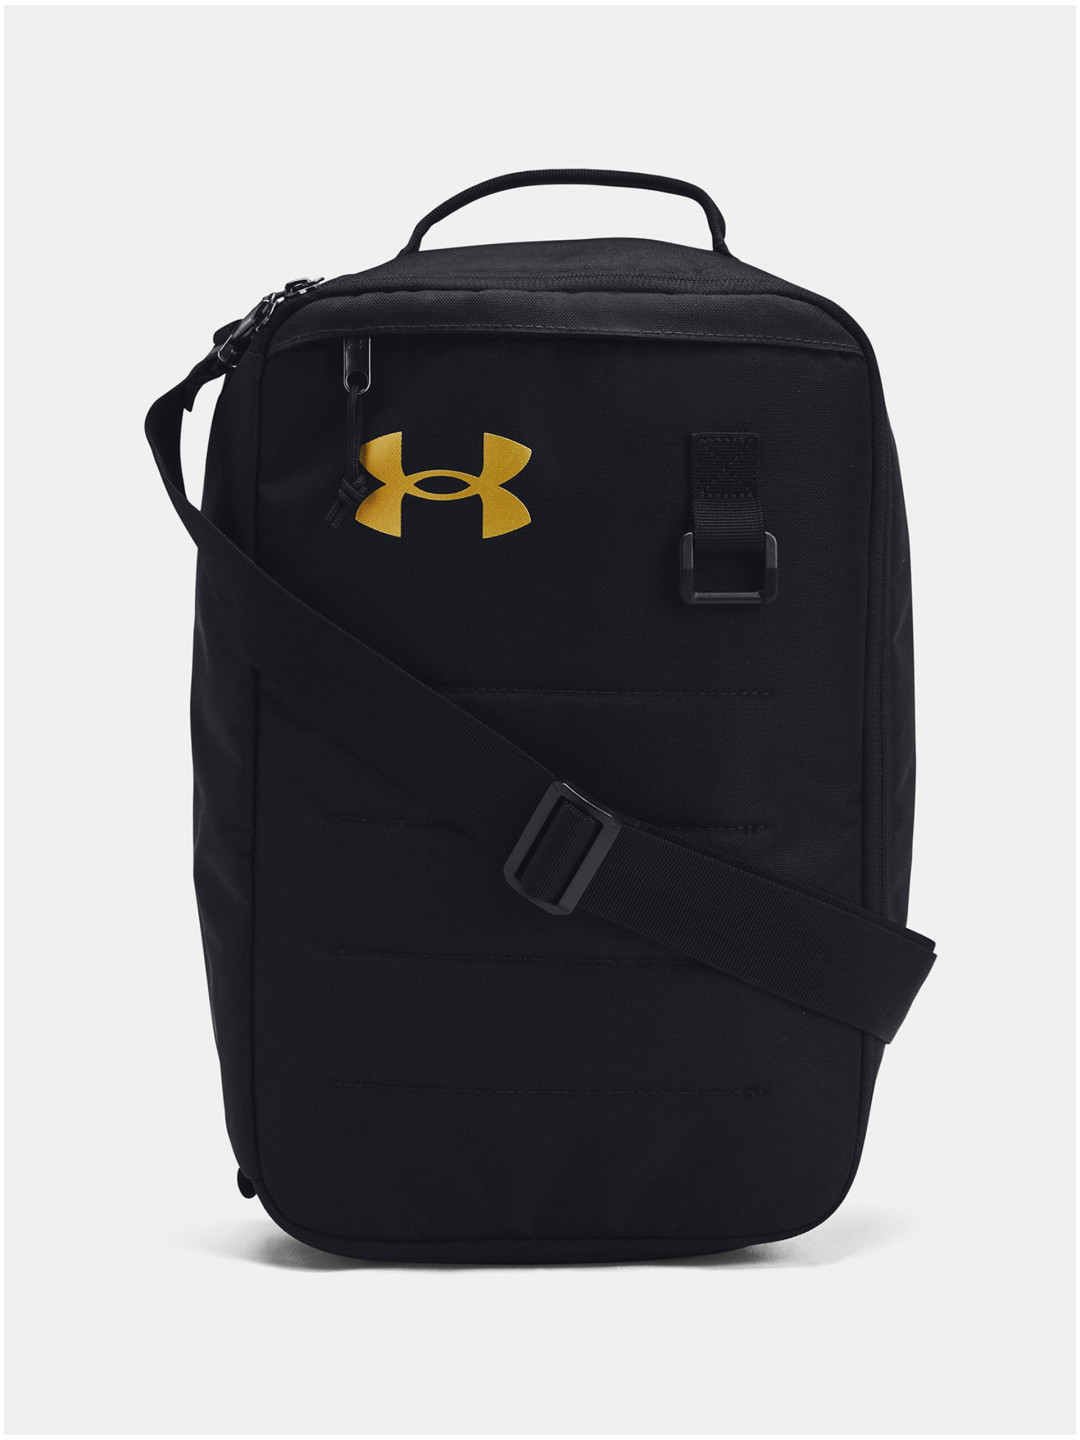 Černá taška Under Armour UA Contain Shoe Bag